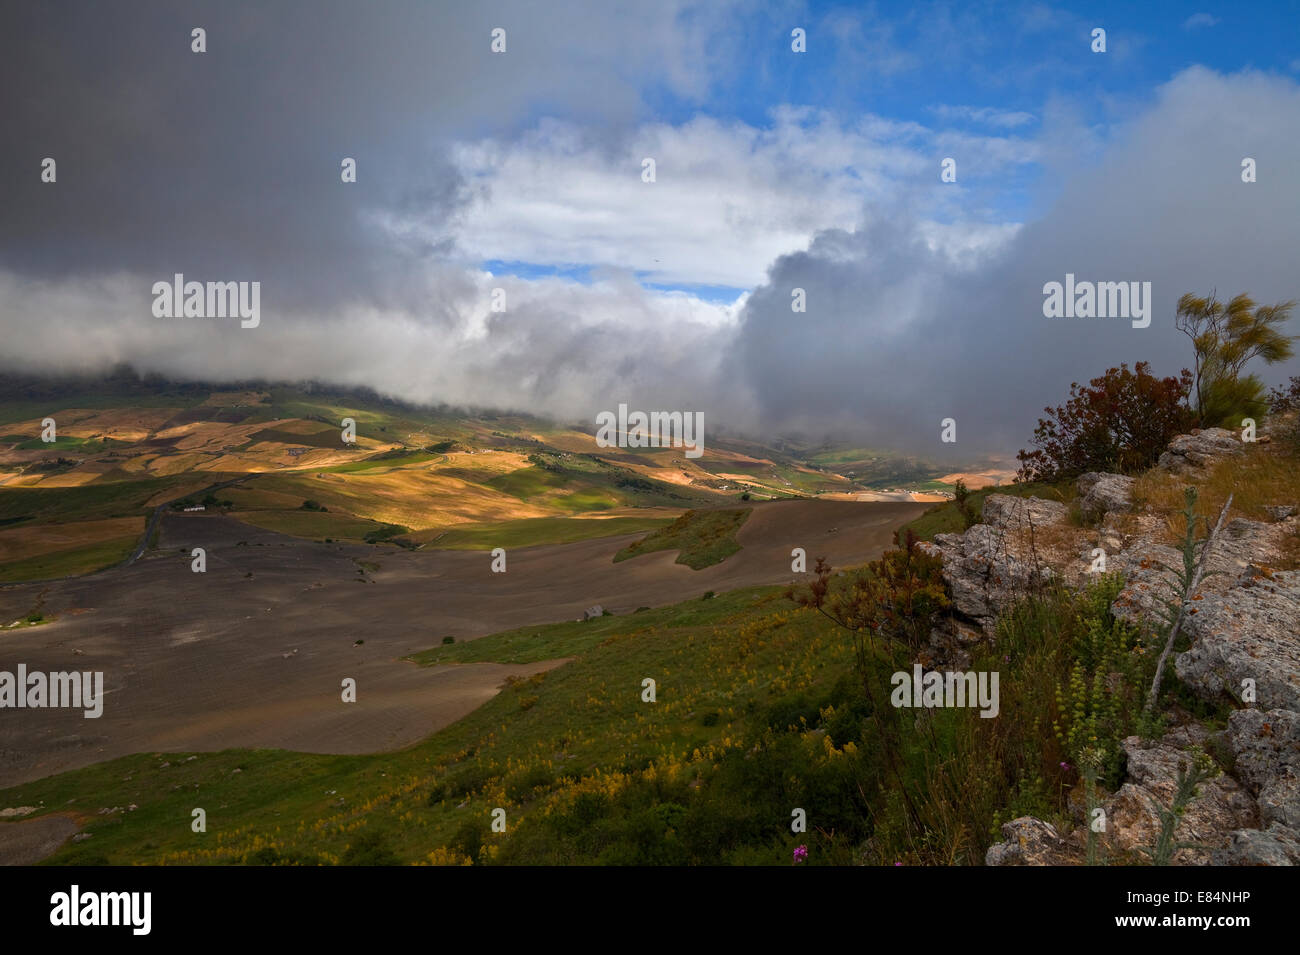 The landscape near the Roman ruins of Acinipo,  Near Ronda in the Province of Malaga, Spain Stock Photo